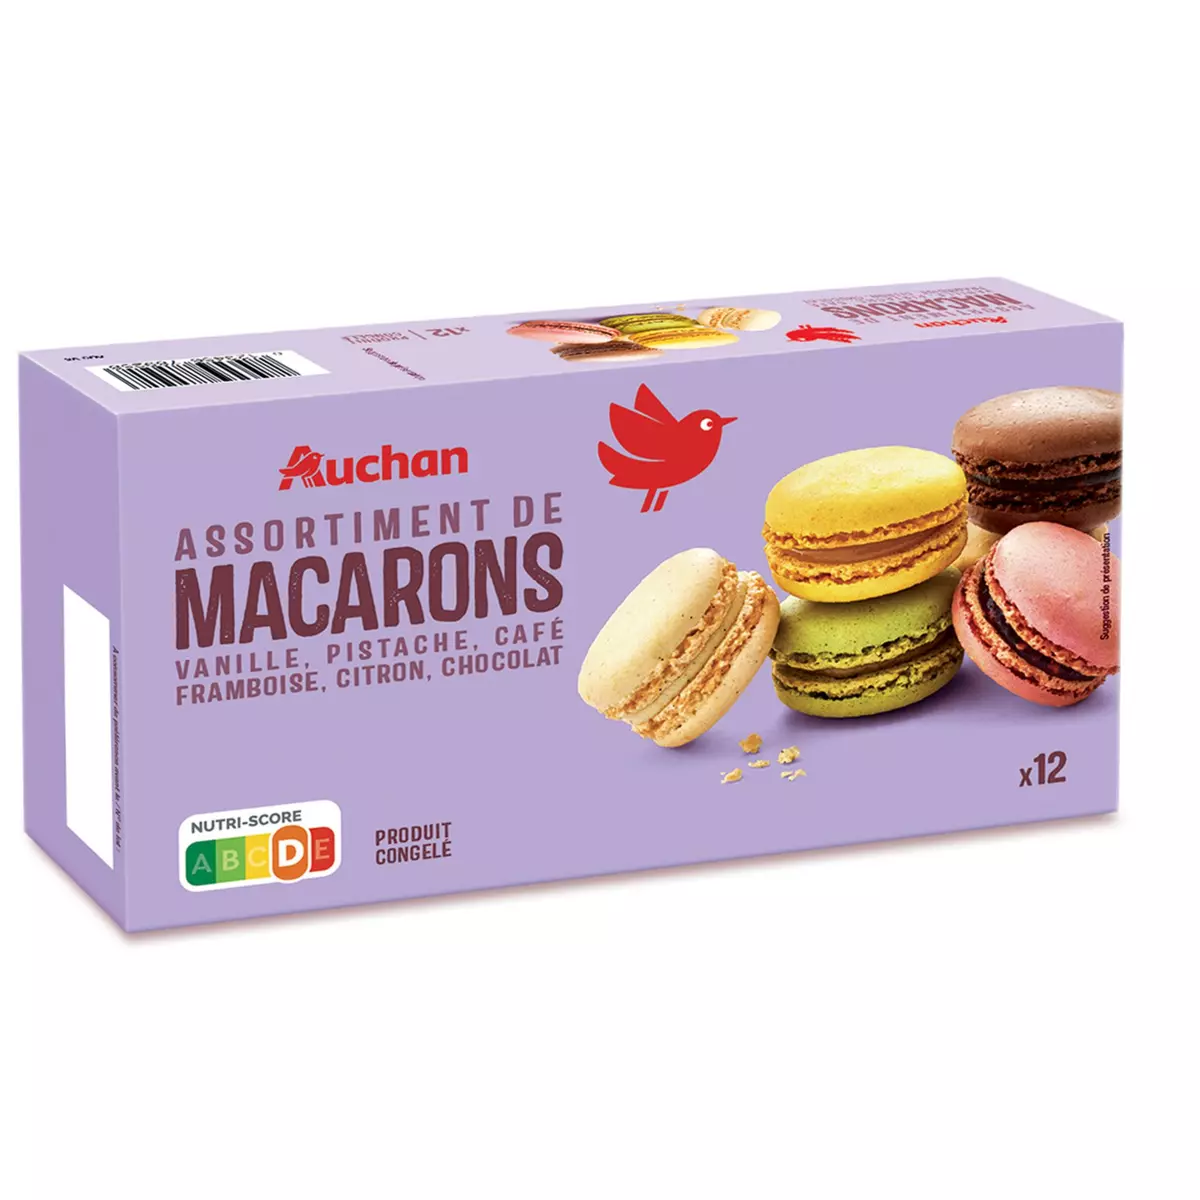 AUCHAN Assortiment de macarons 12 pièces 154g